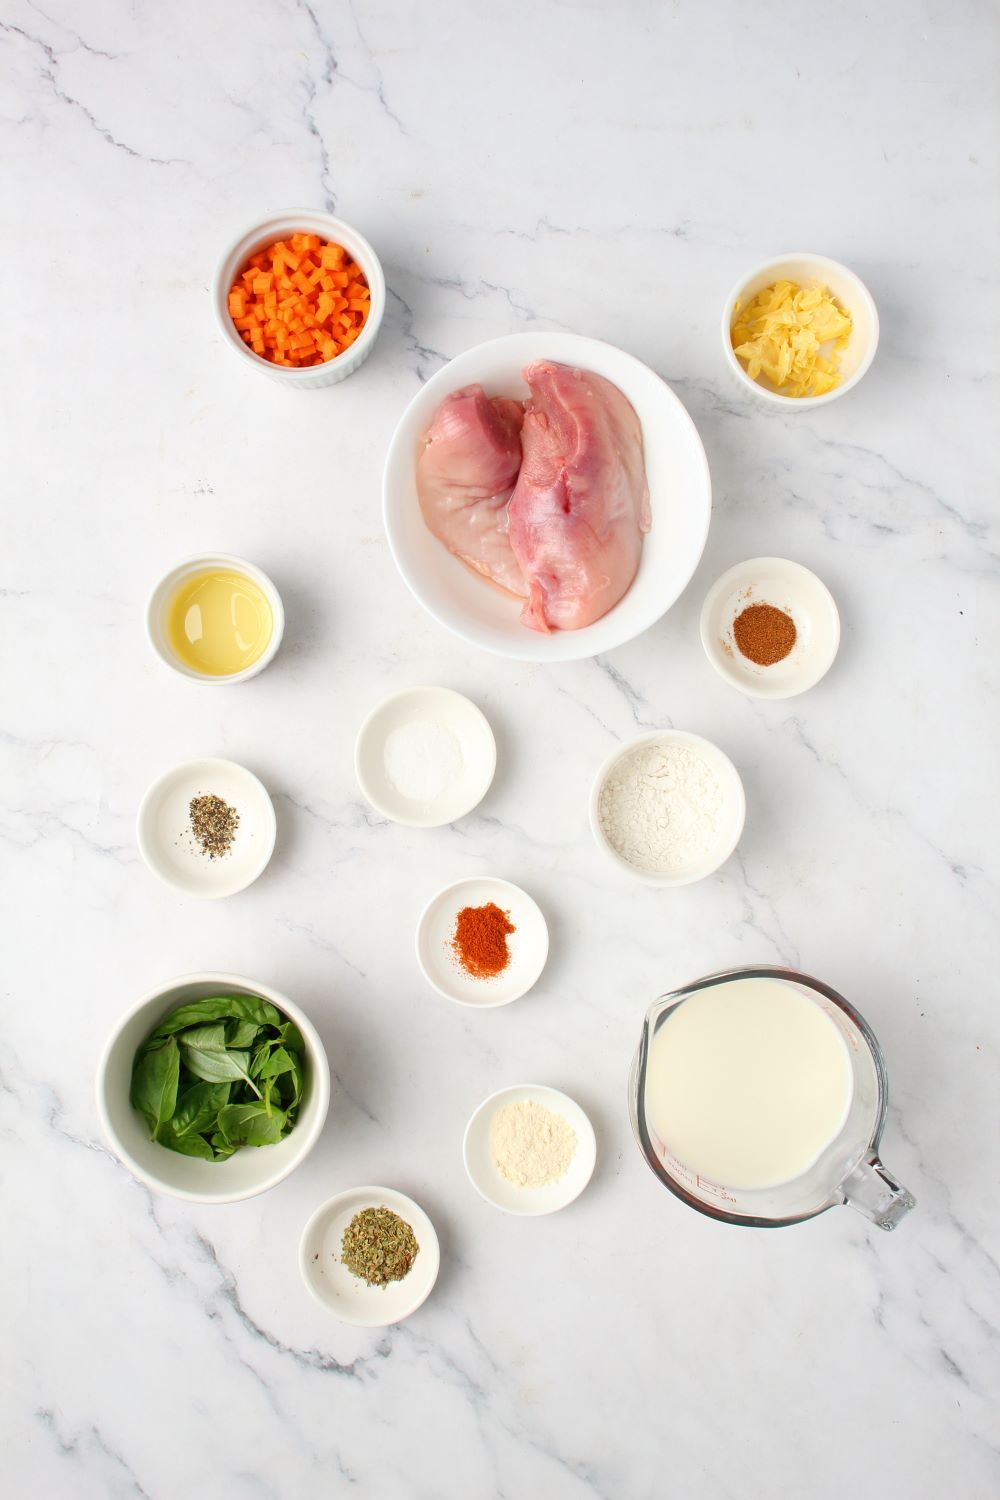 Ingredients for Creamy Herb Chicken